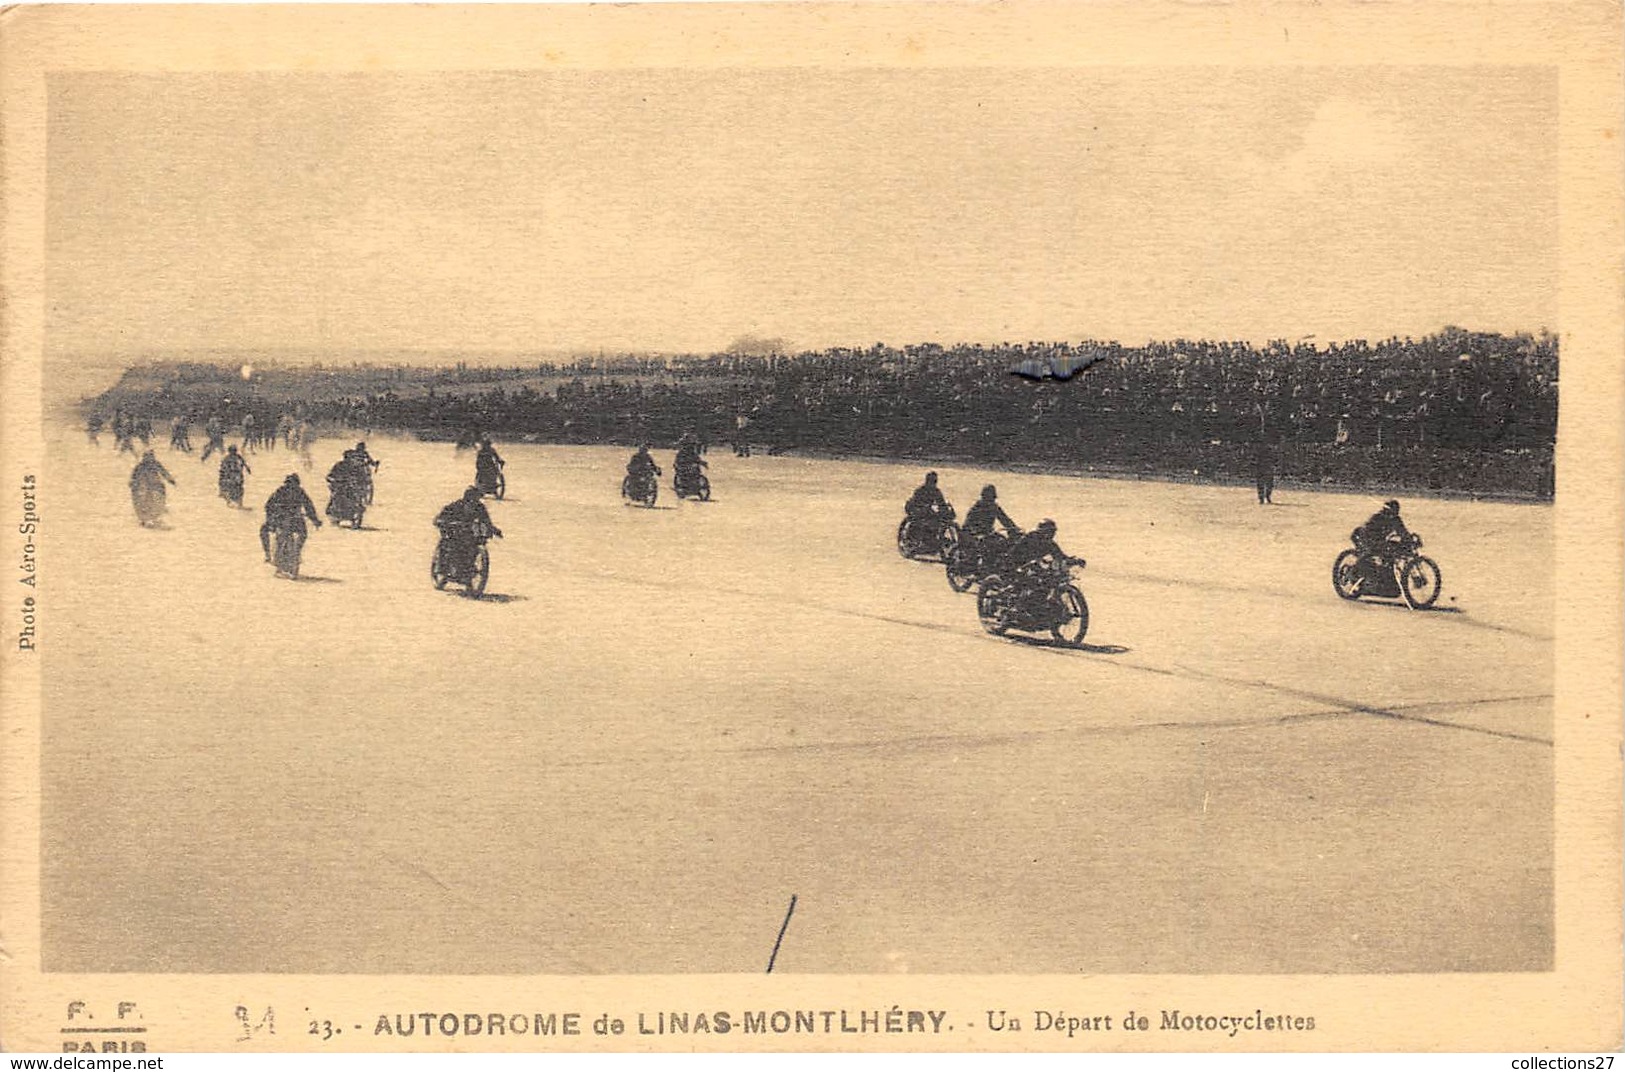 91-LINAS-MONTLHERY-AUTODROME, UN DEPART DE MOTOCYCLETTES - Montlhery